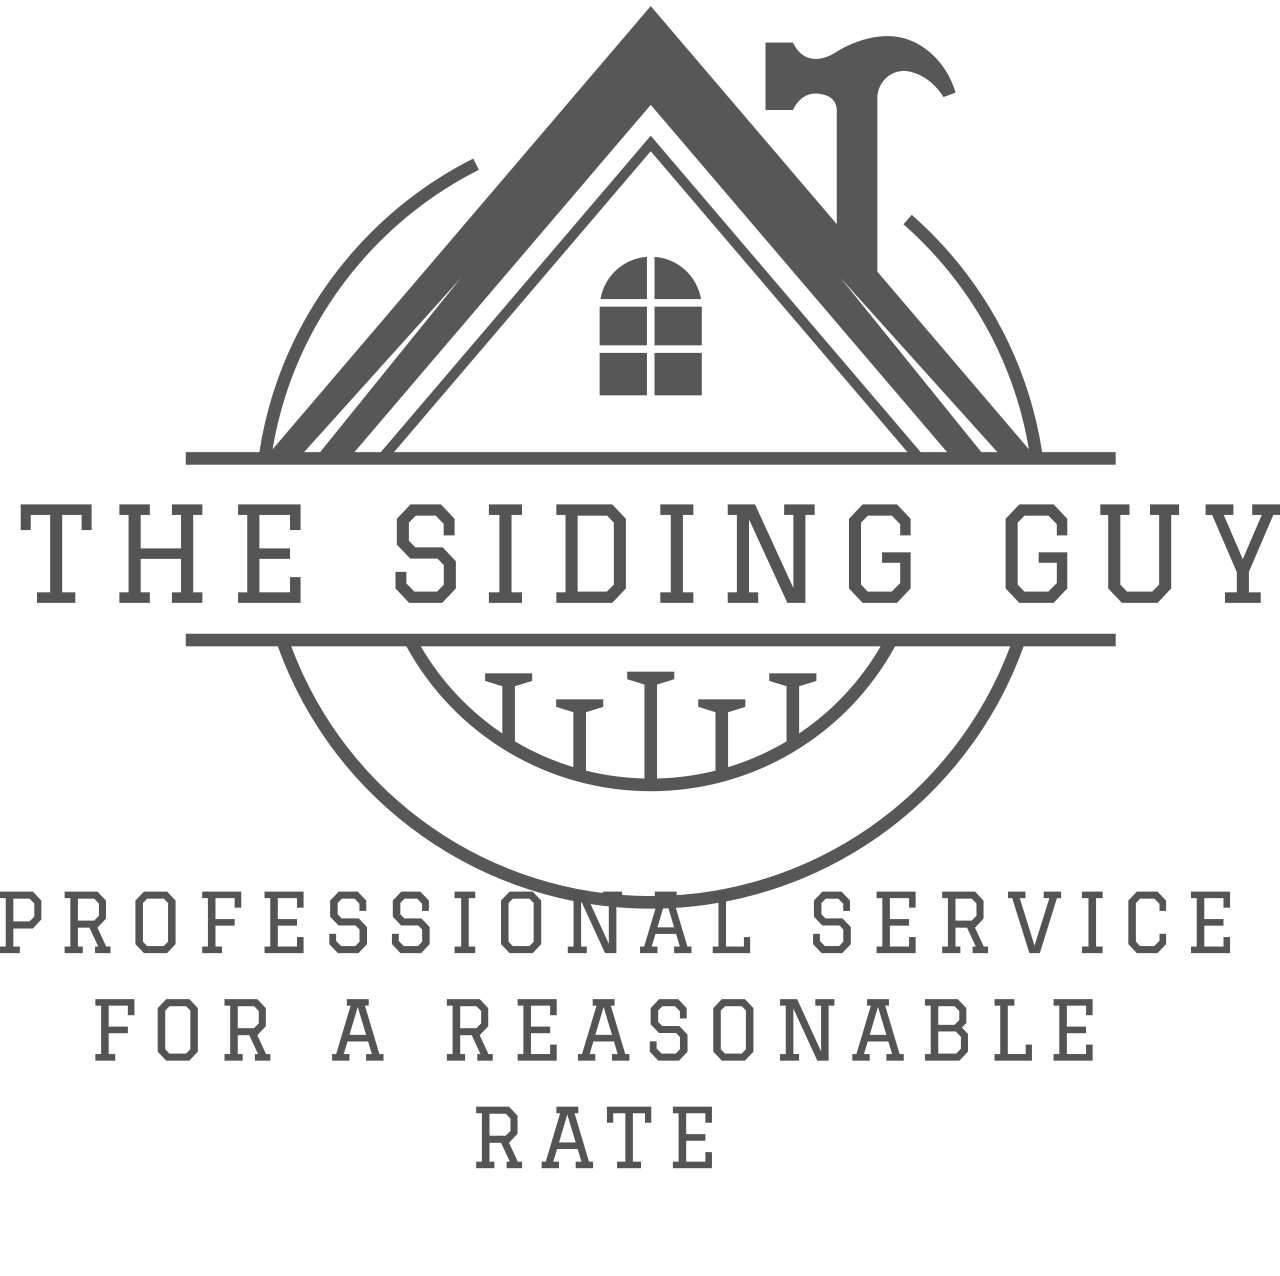 The Siding Guy LLC's web page